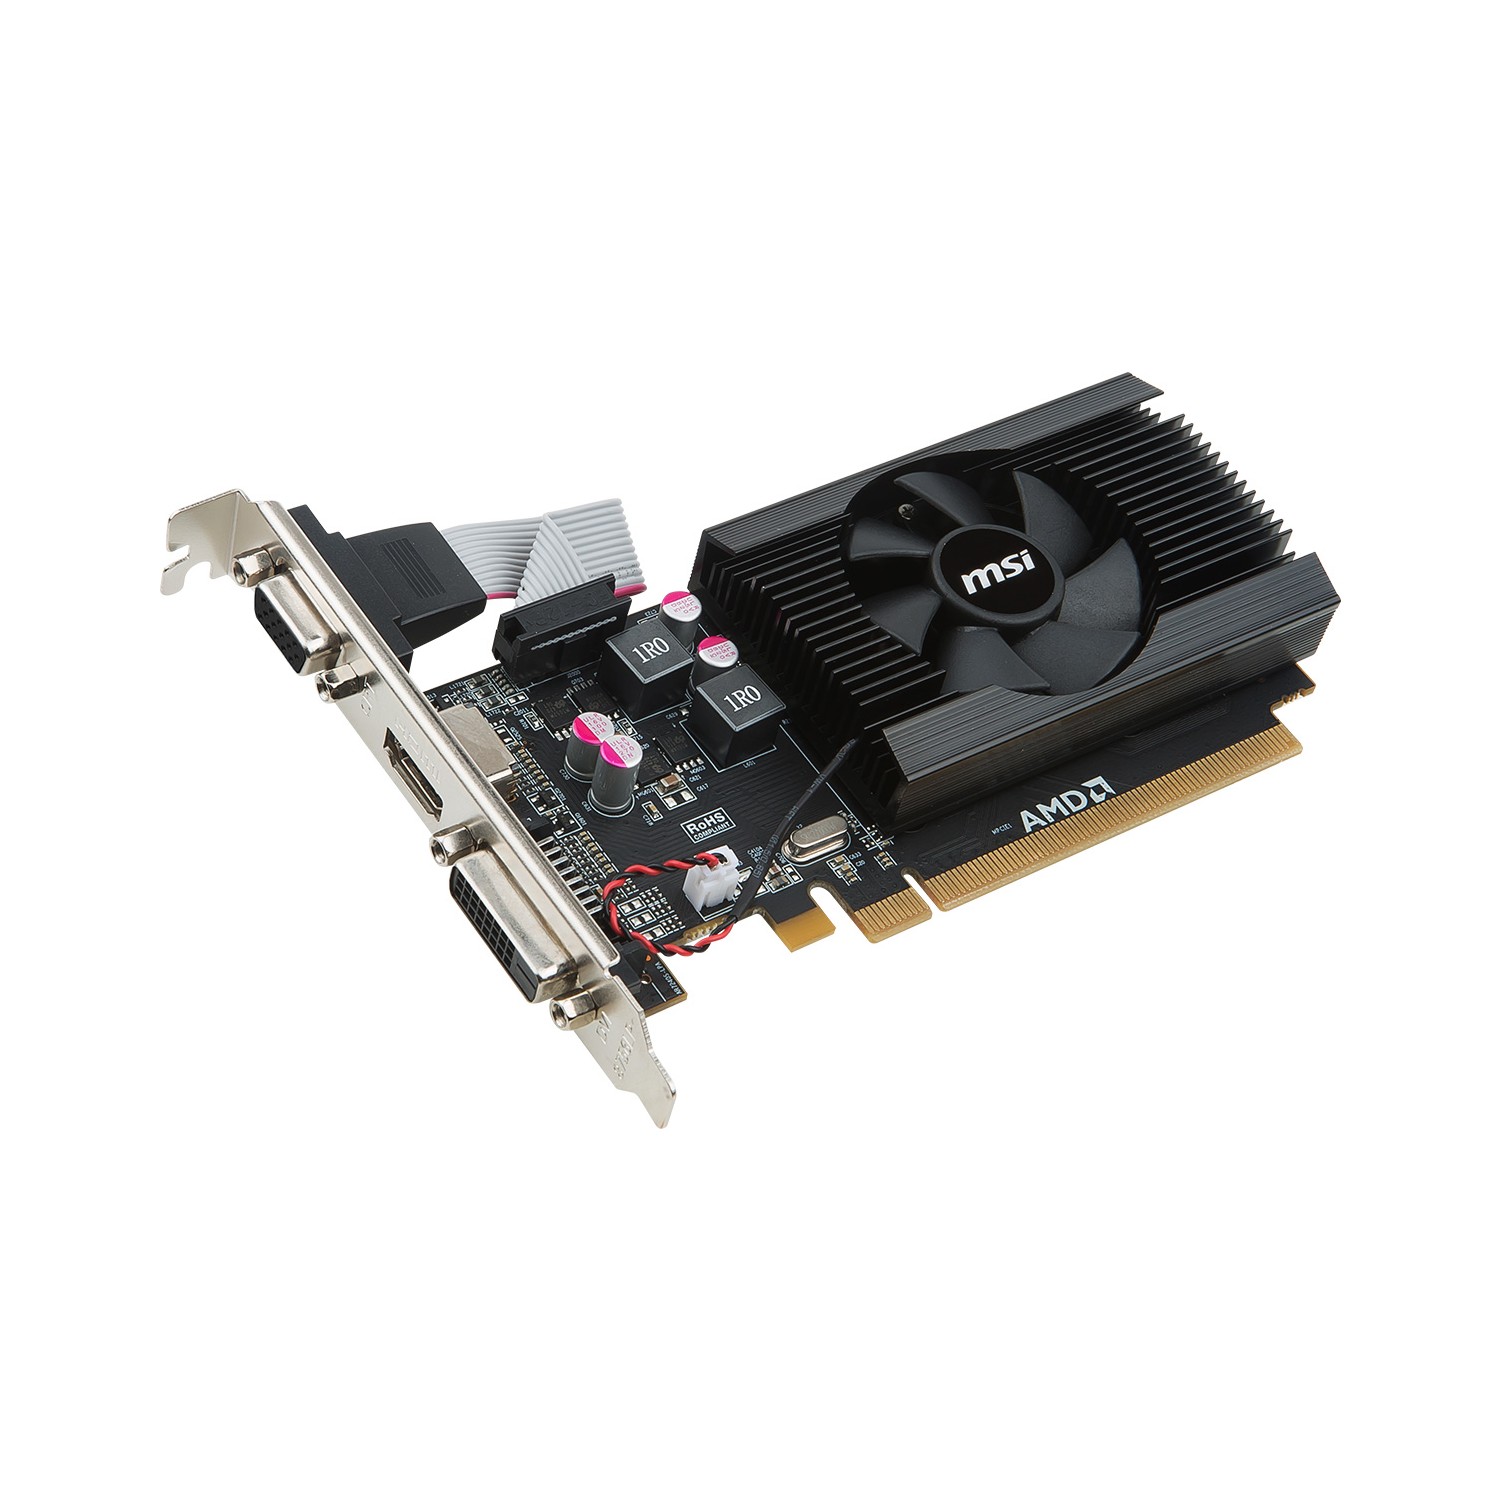 MSI AMD R7 240 LOW PROFILE 2GB DDR3 64Bit VGA/DVI/HDMI 16X DX12 2GD3 LP